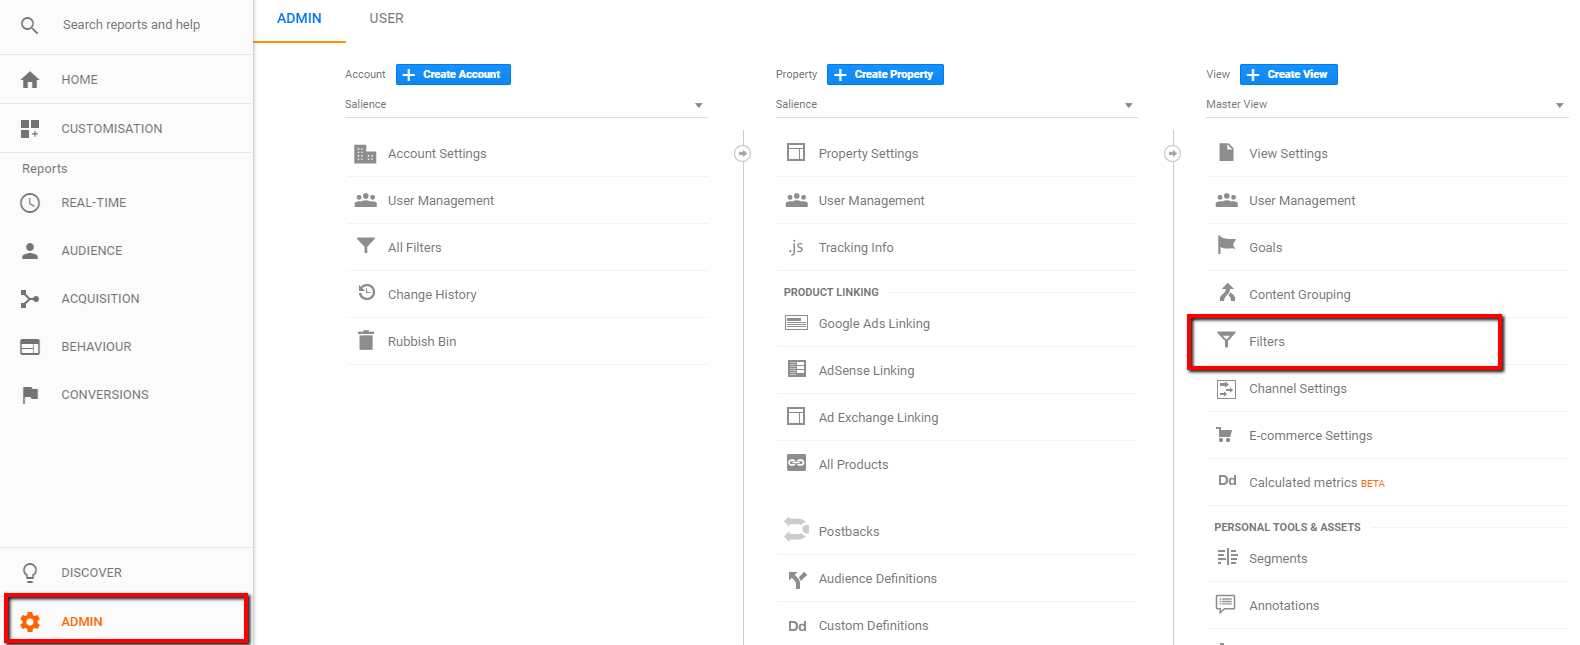 Google Analytics admin filter options screen shot